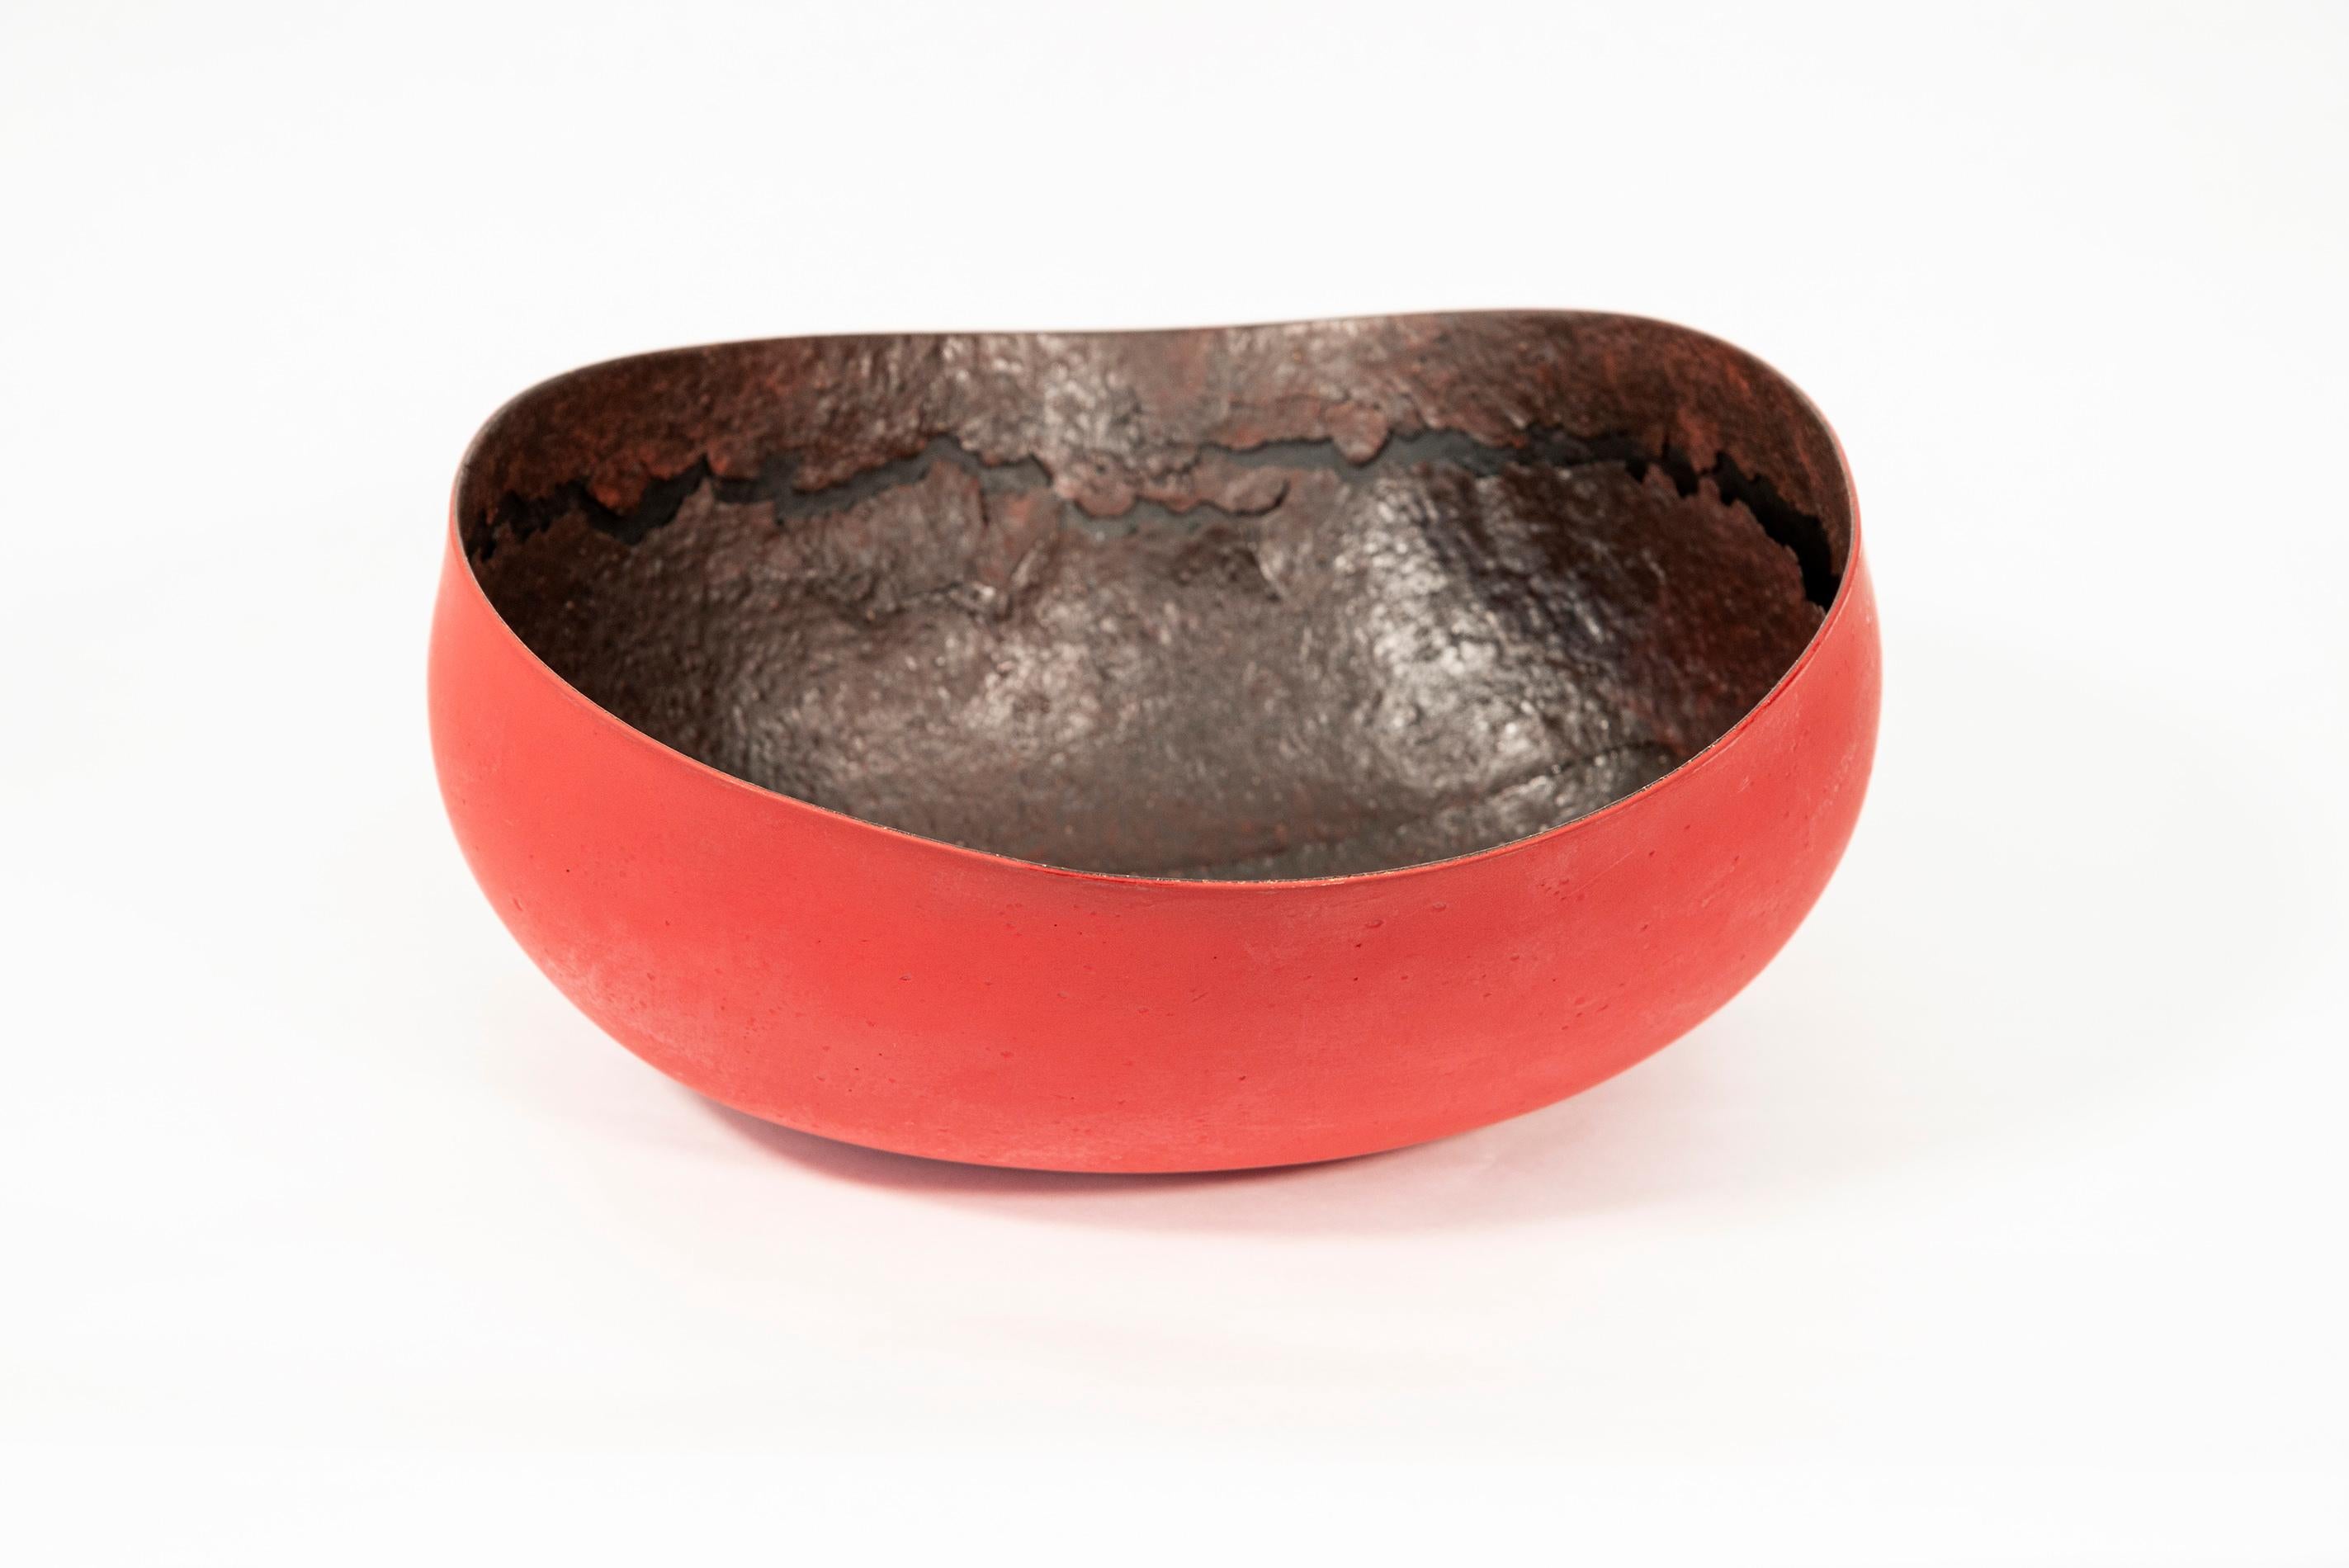 Untitled Bowl (Red)  -  red, black, nature inspired, textured, ceramic vessel - Sculpture by Steven Heinemann